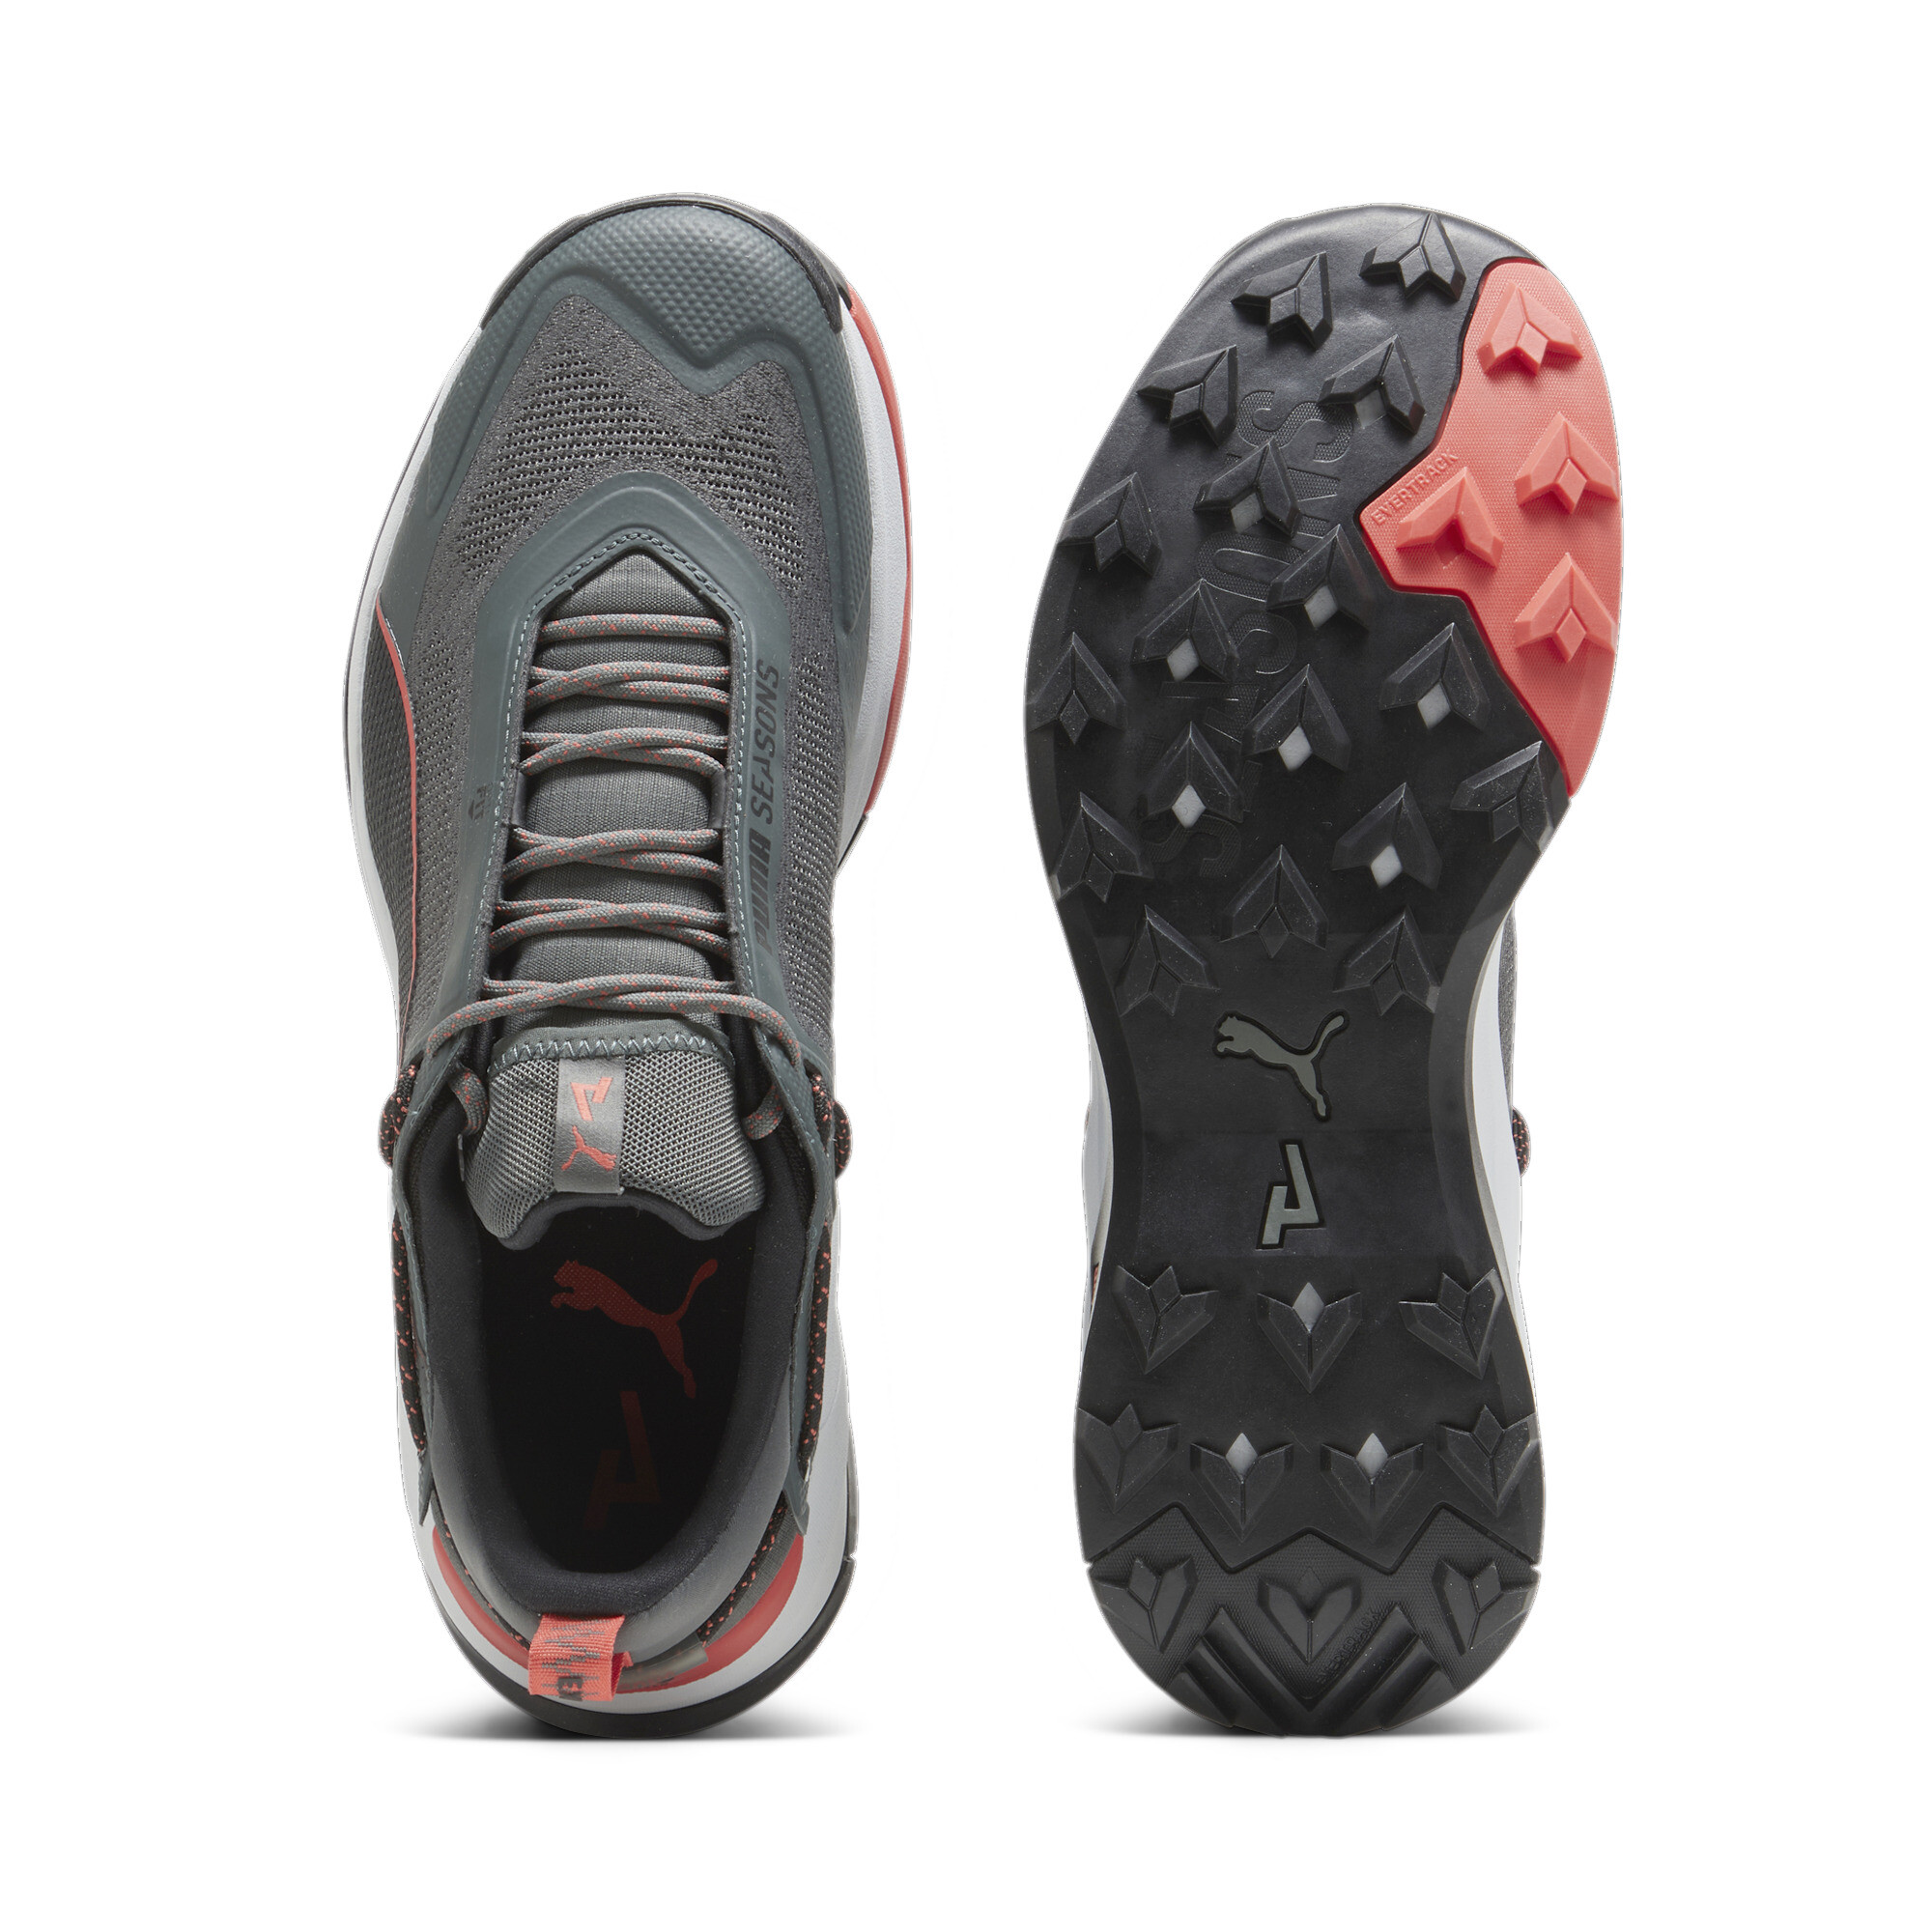 Men's PUMA Explore NITROâ¢ Hiking Shoes In Gray, Size EU 40.5